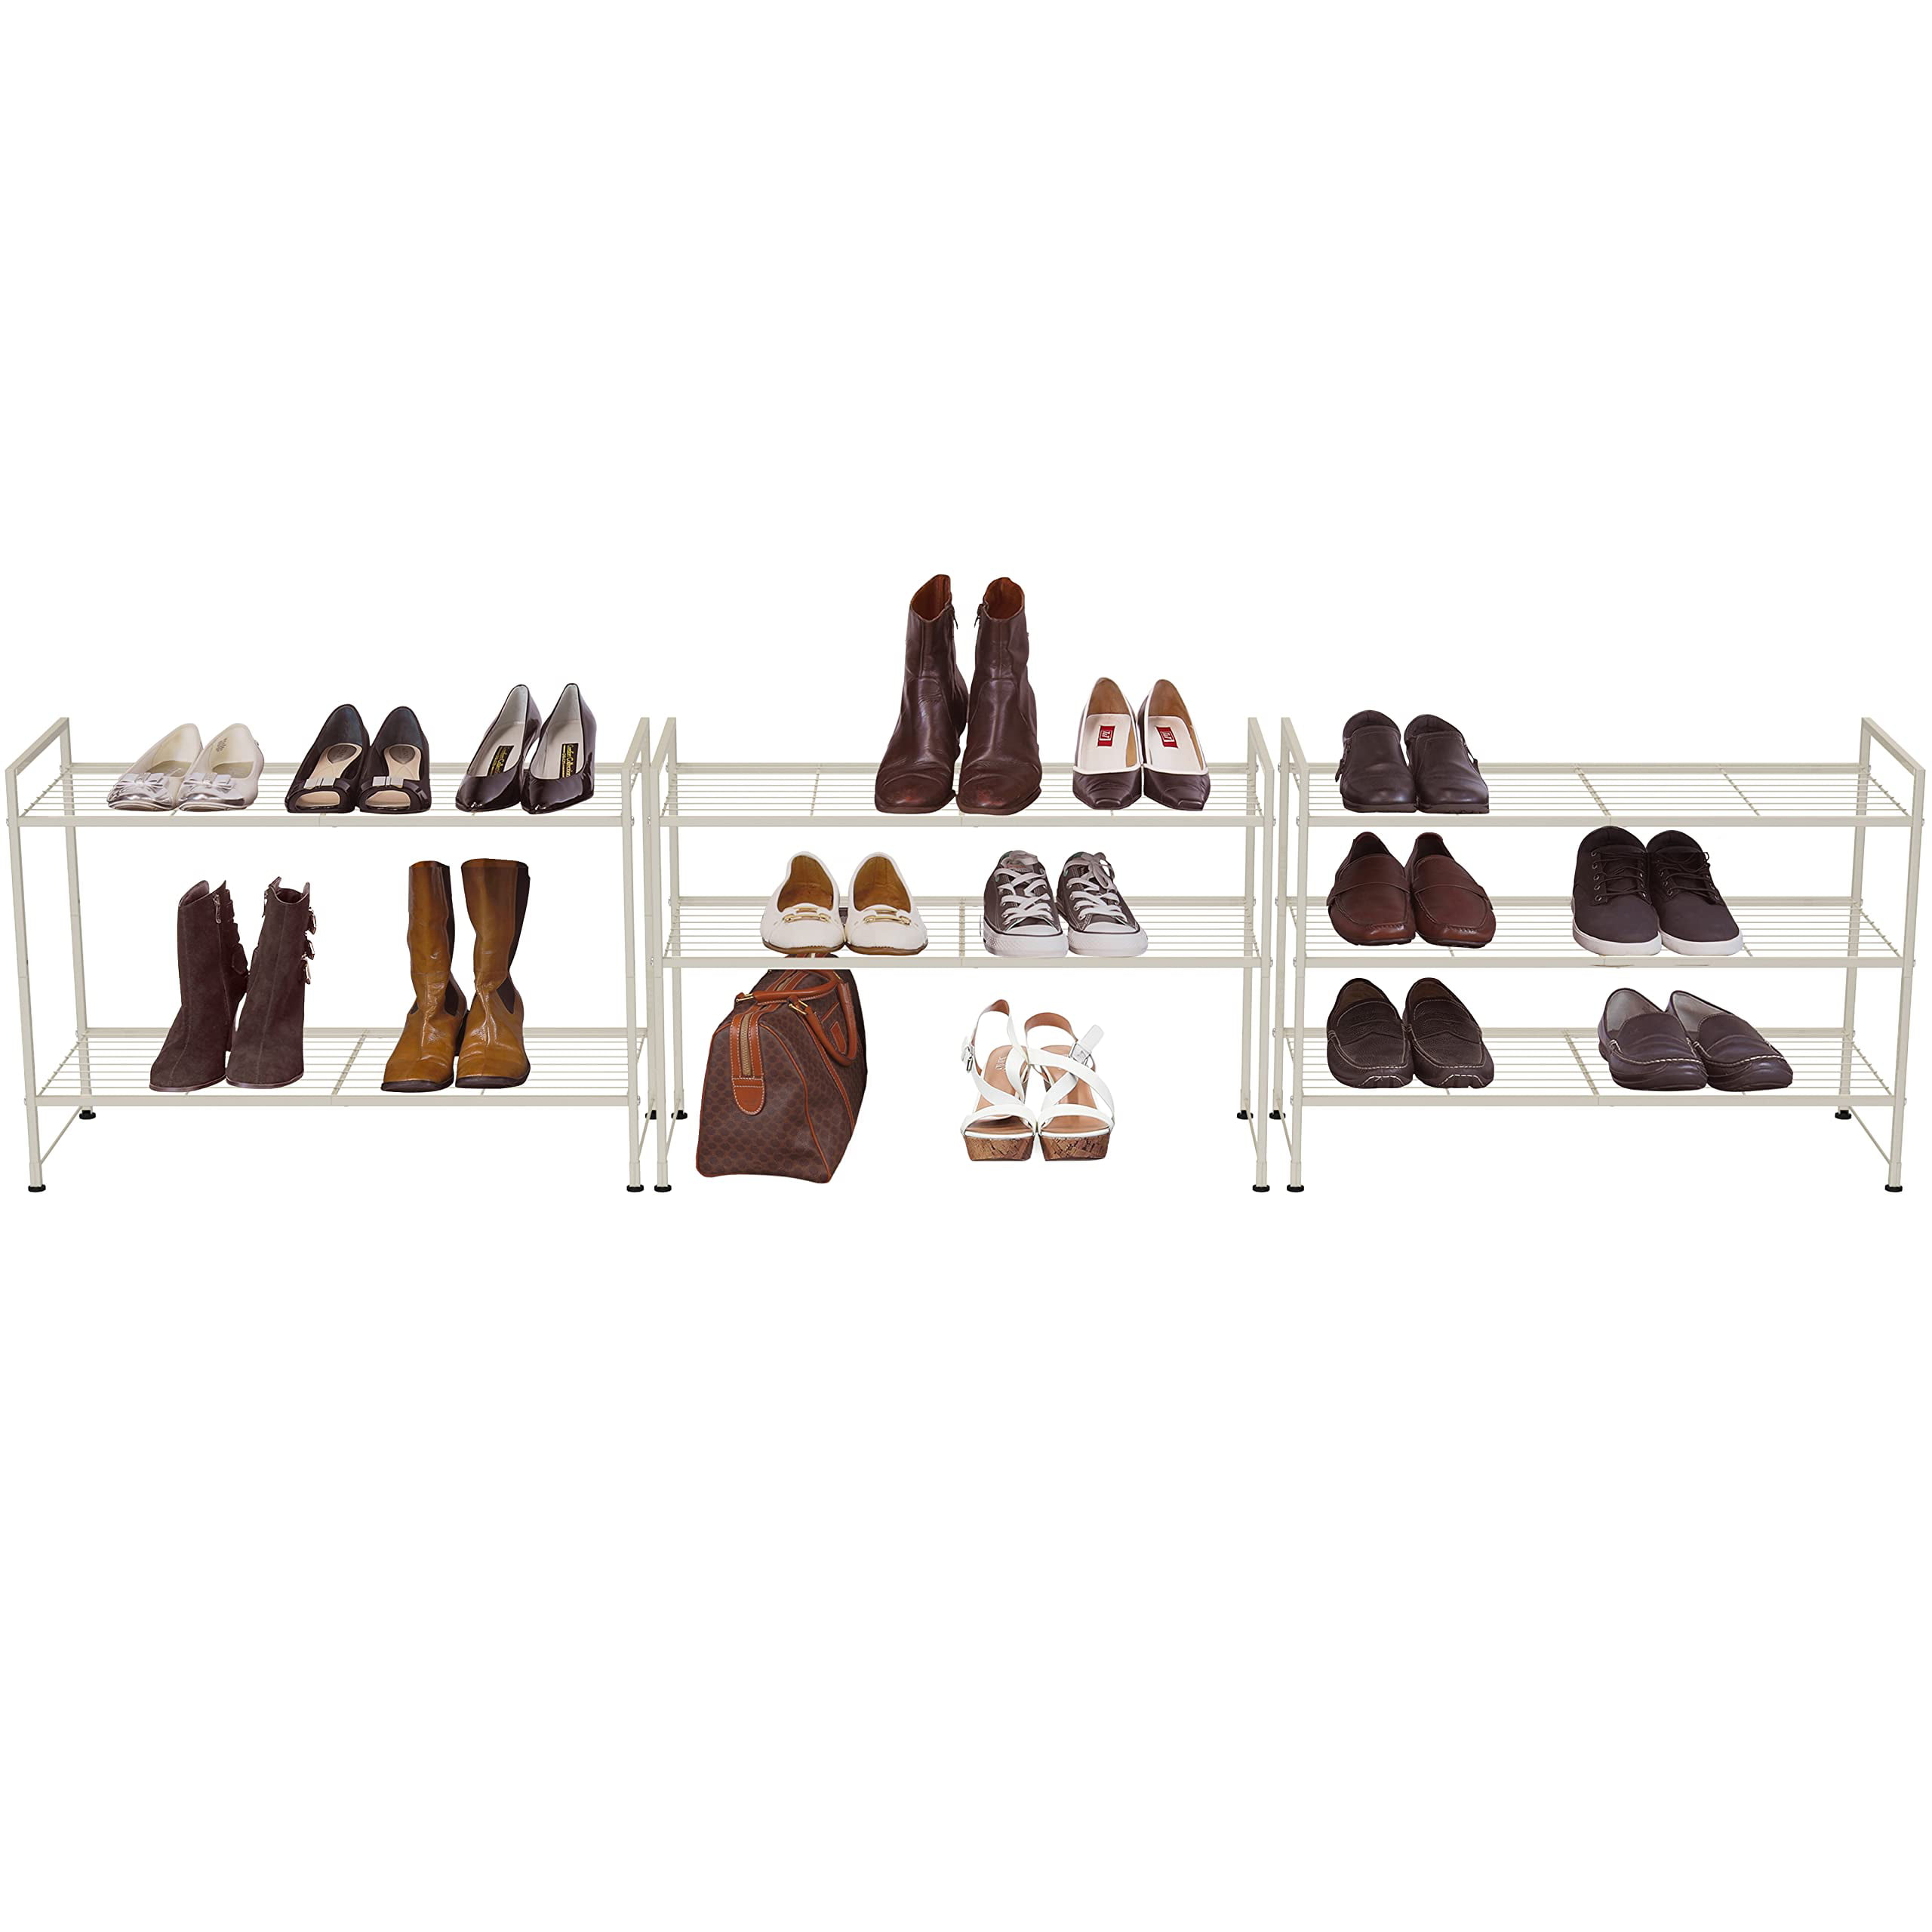 1pc White Household Shoe Rack (3-7 Tiers) For Doorway, Storage, Dorm Room  Organizer